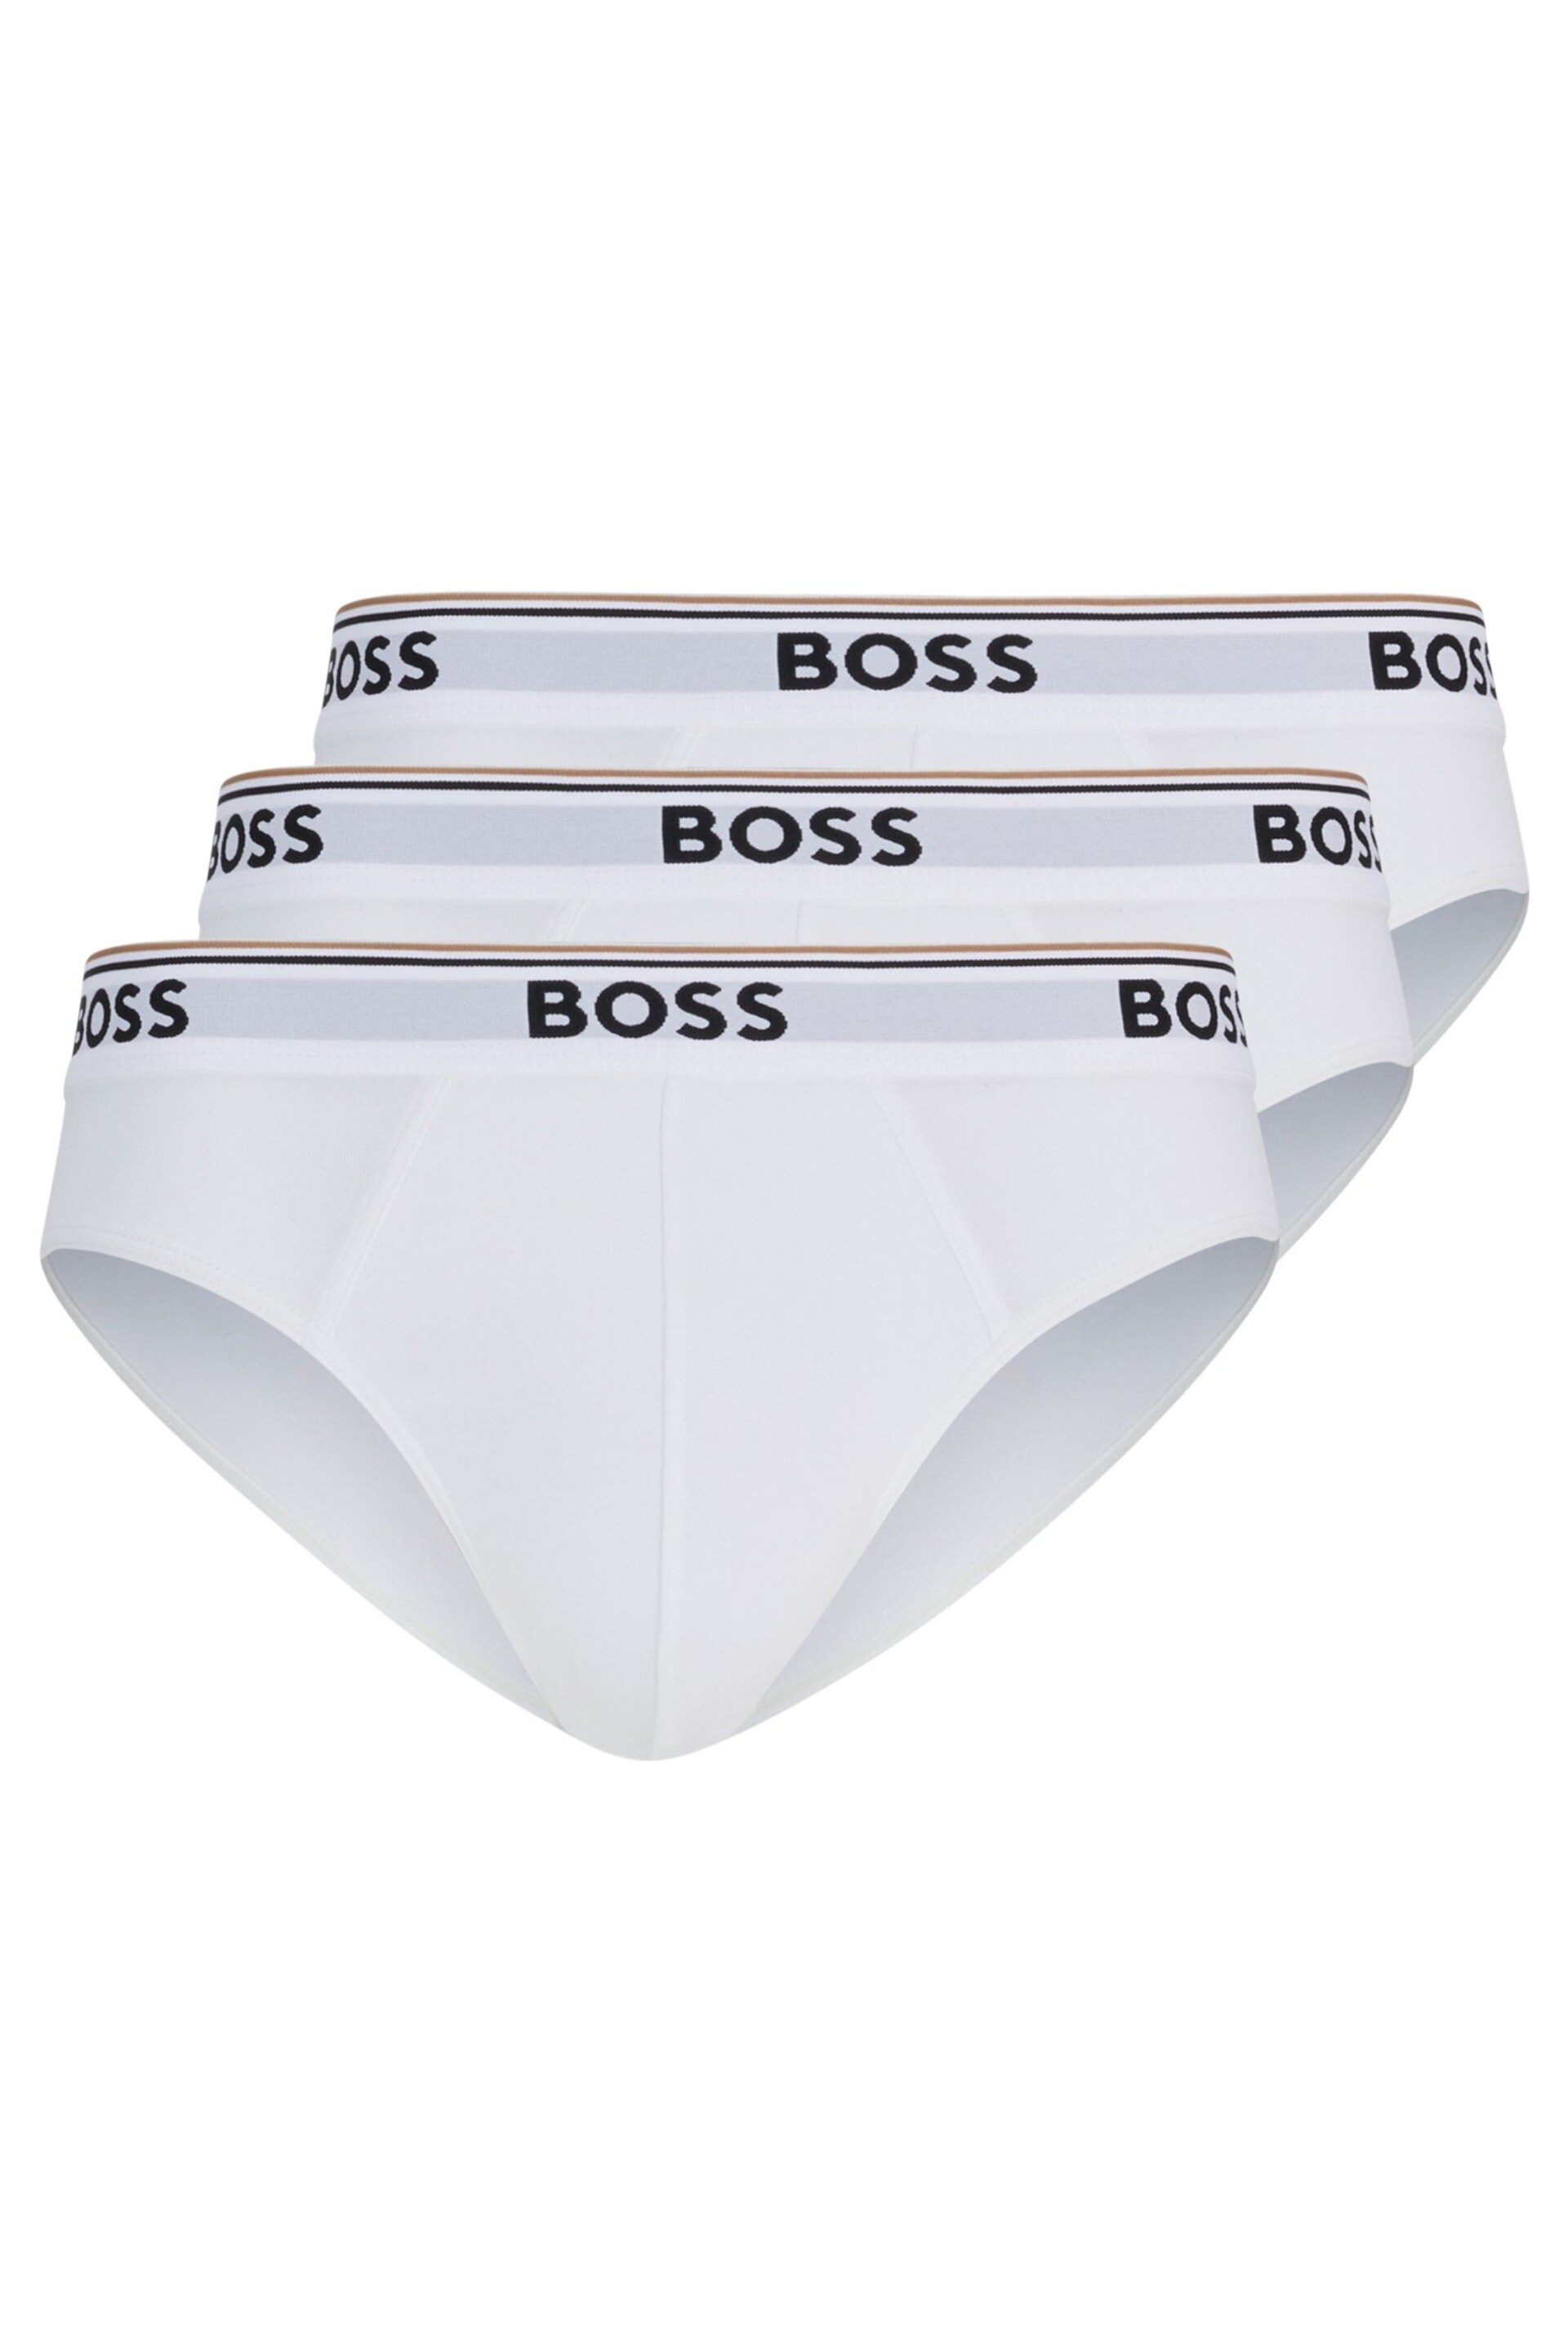 BOSS White Power Briefs 3 Pack - Image 7 of 7